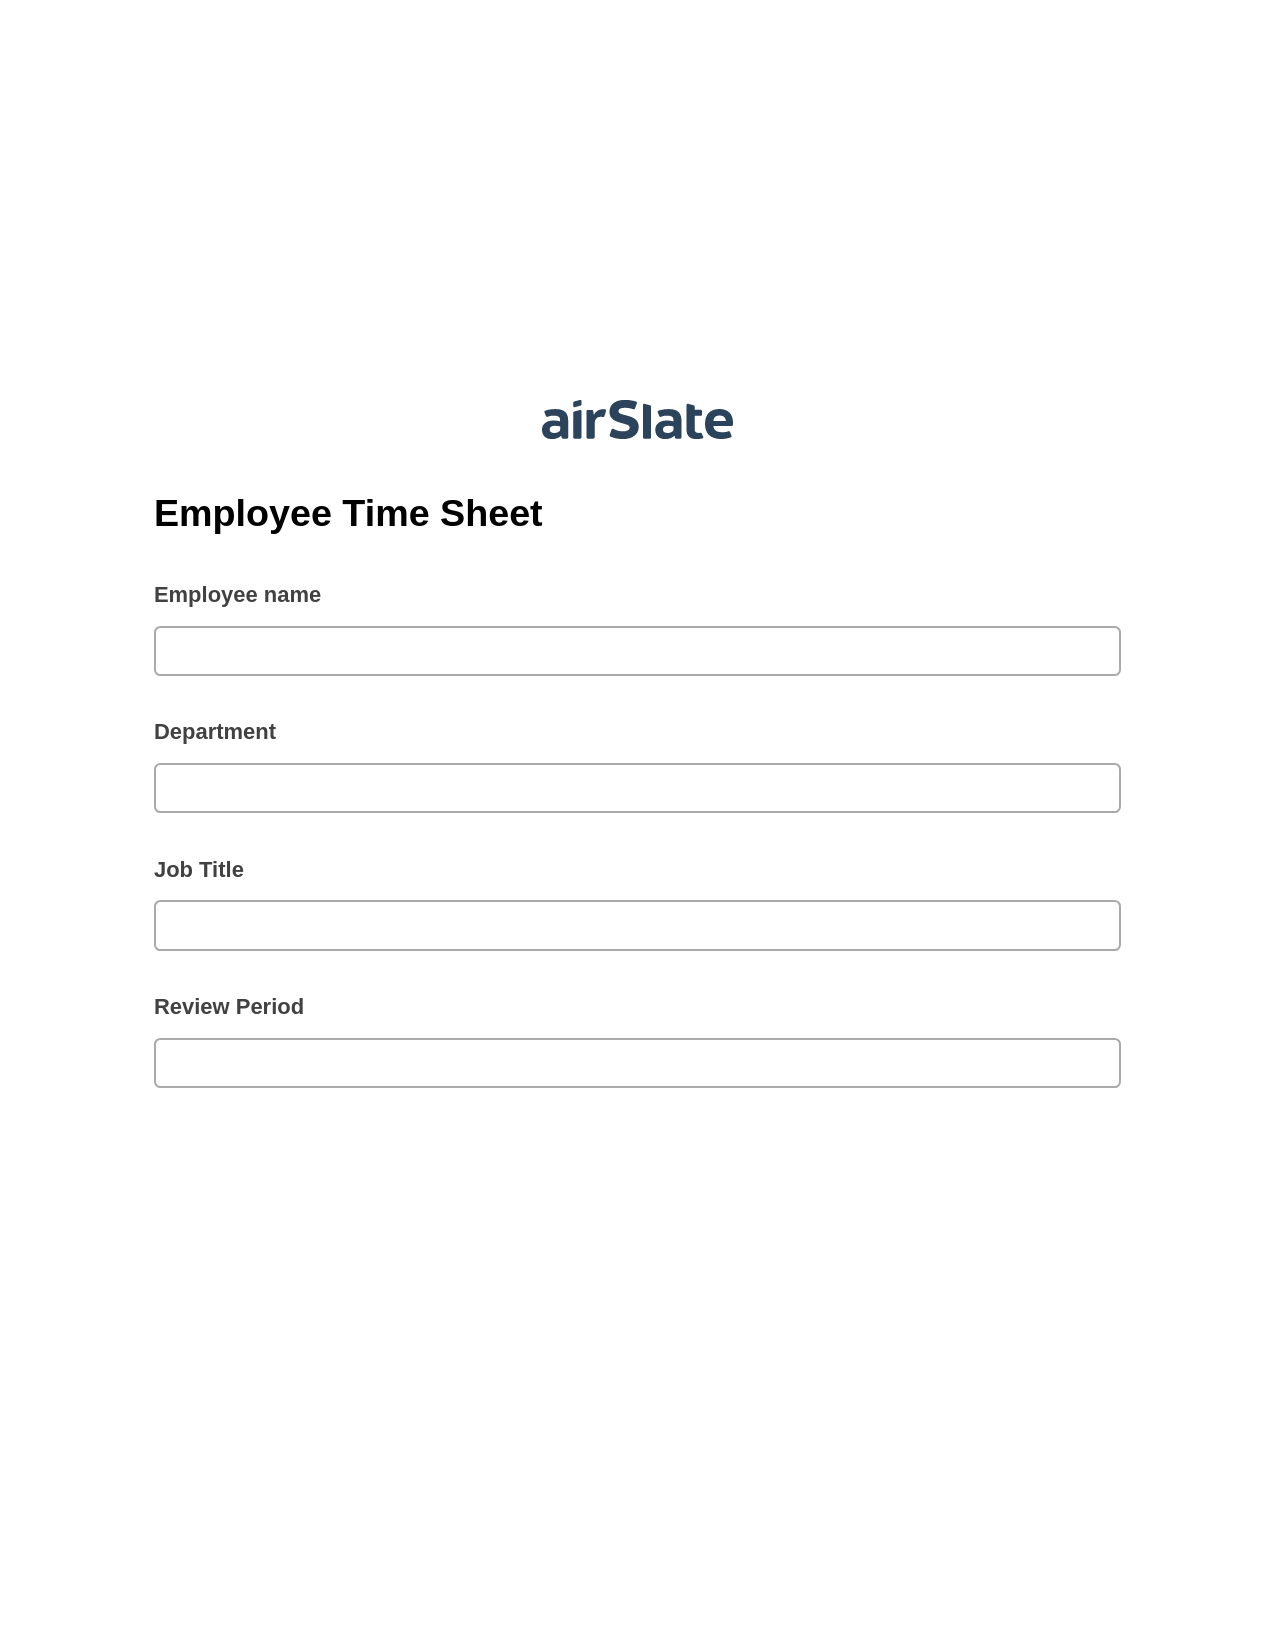 Multirole Employee Time Sheet Pre-fill from Excel Spreadsheet Bot, Update Audit Trail Bot, Post-finish Document Bot